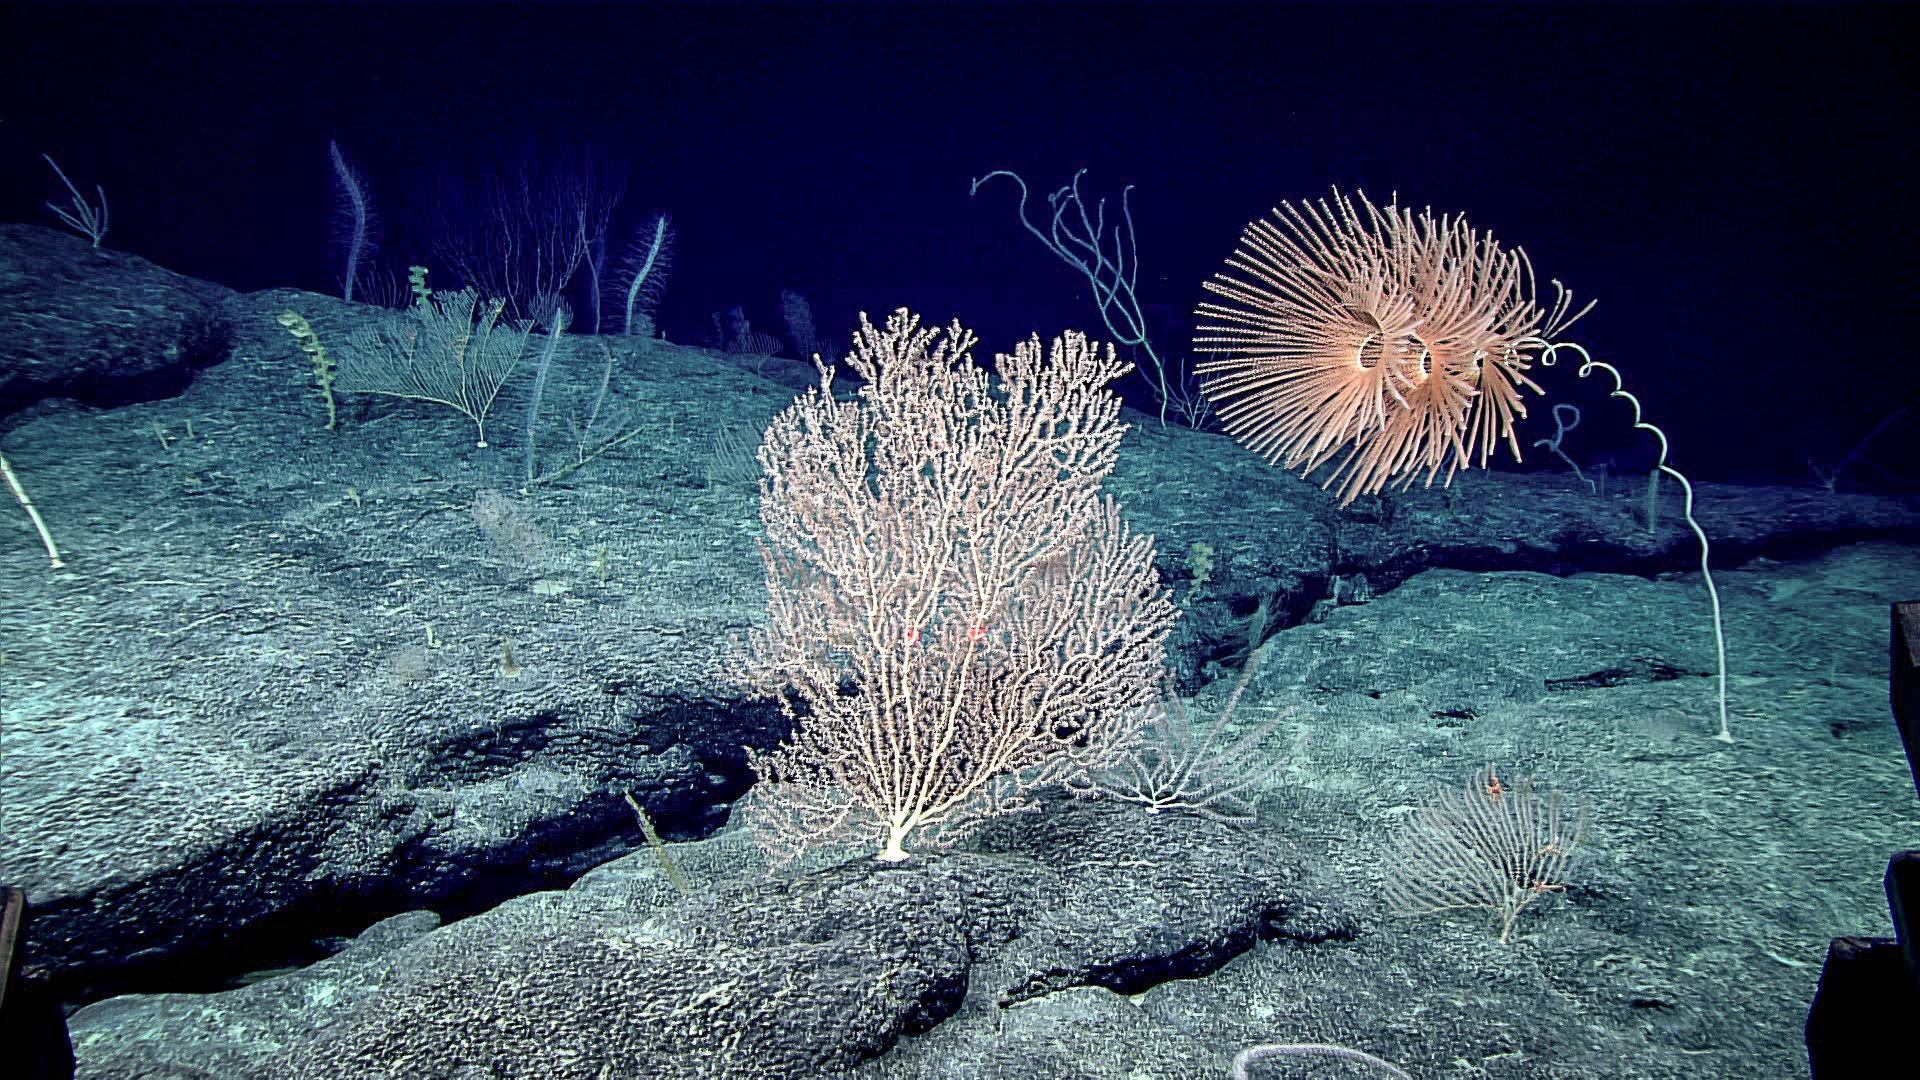 Robotic Deep Sea Explorer Uncovers Treasure Trove Of Freaky Marine Life